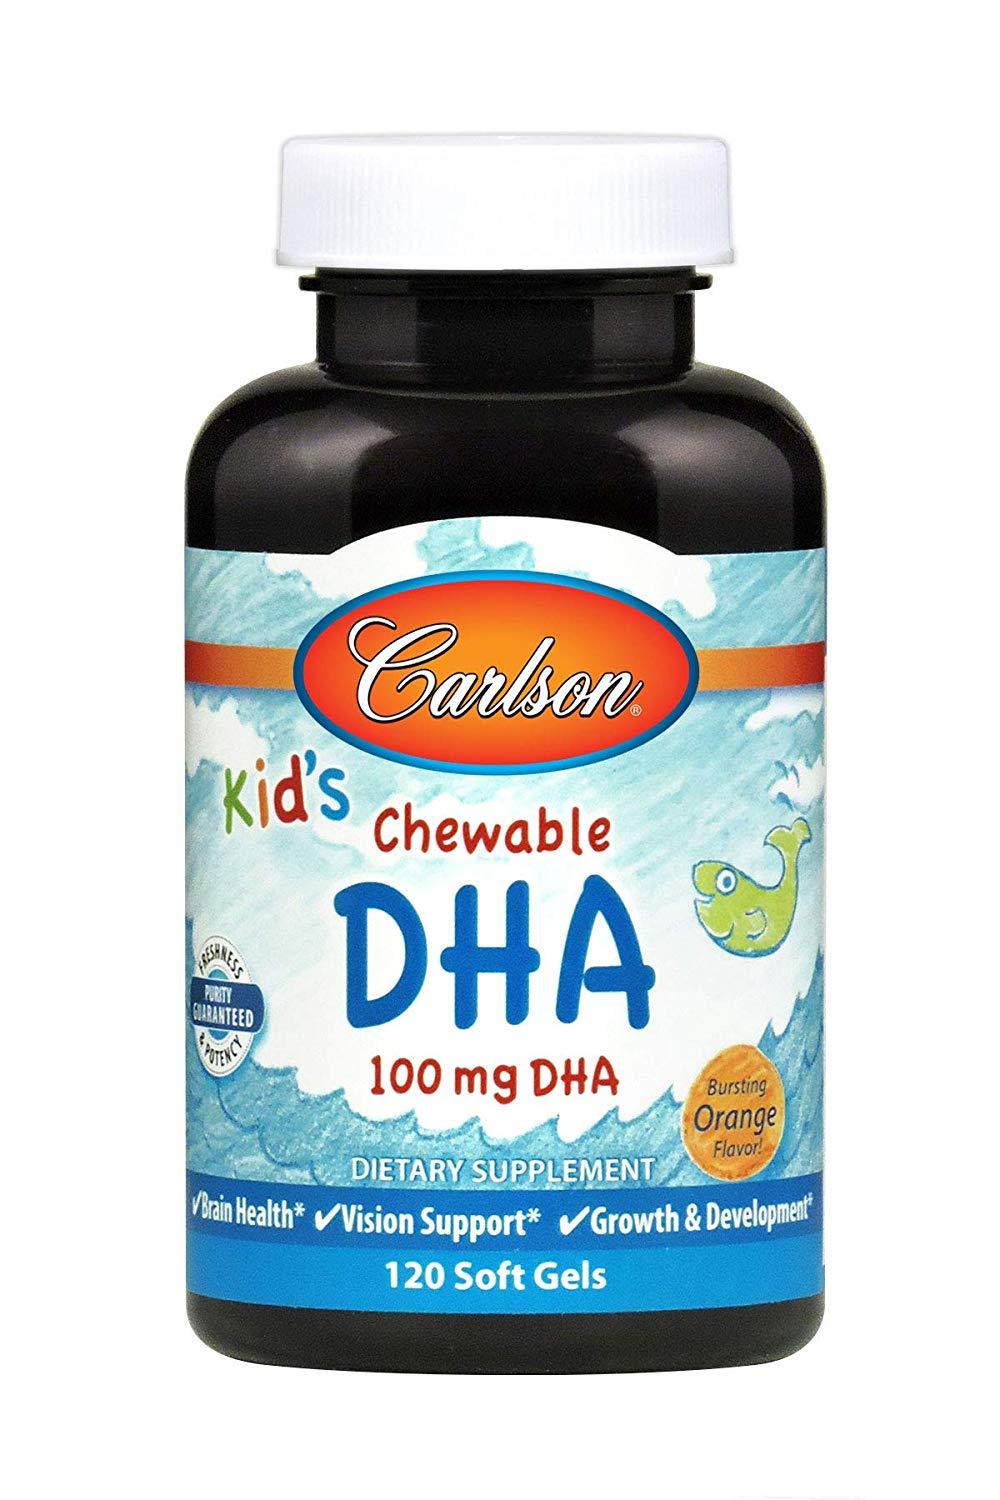 Carlson Kid's Chewable DHA Bursting Orange Flavor 100 mg 120 Softgels Brain, Vision, Growth Development